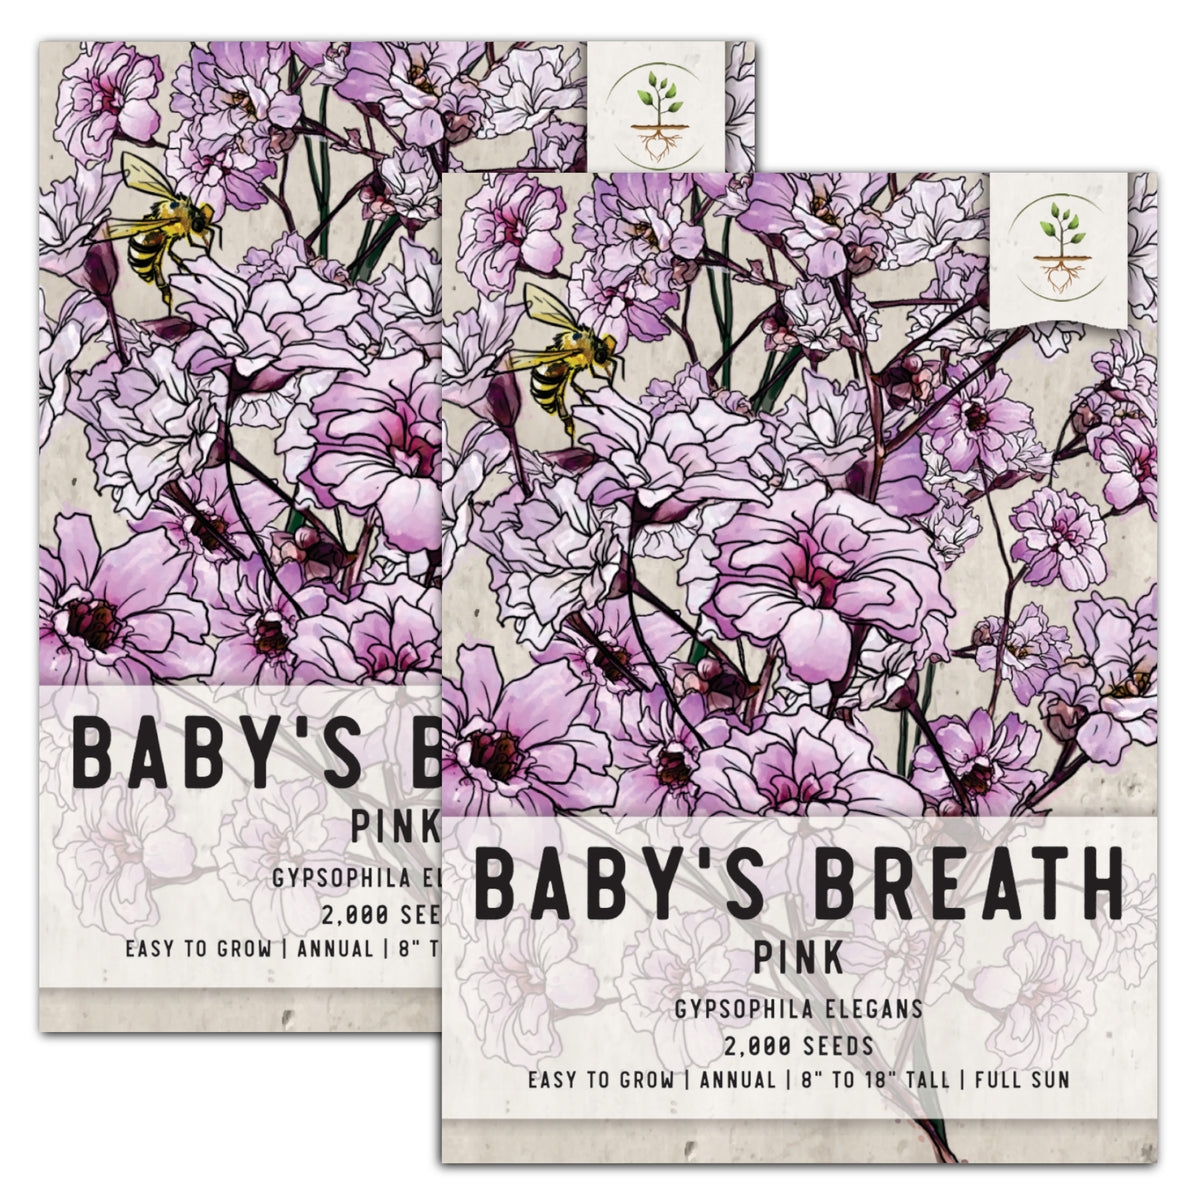 Baby's Breath Seeds, Gypsophila Elegans - 1/4 lb + Bulk Sizes